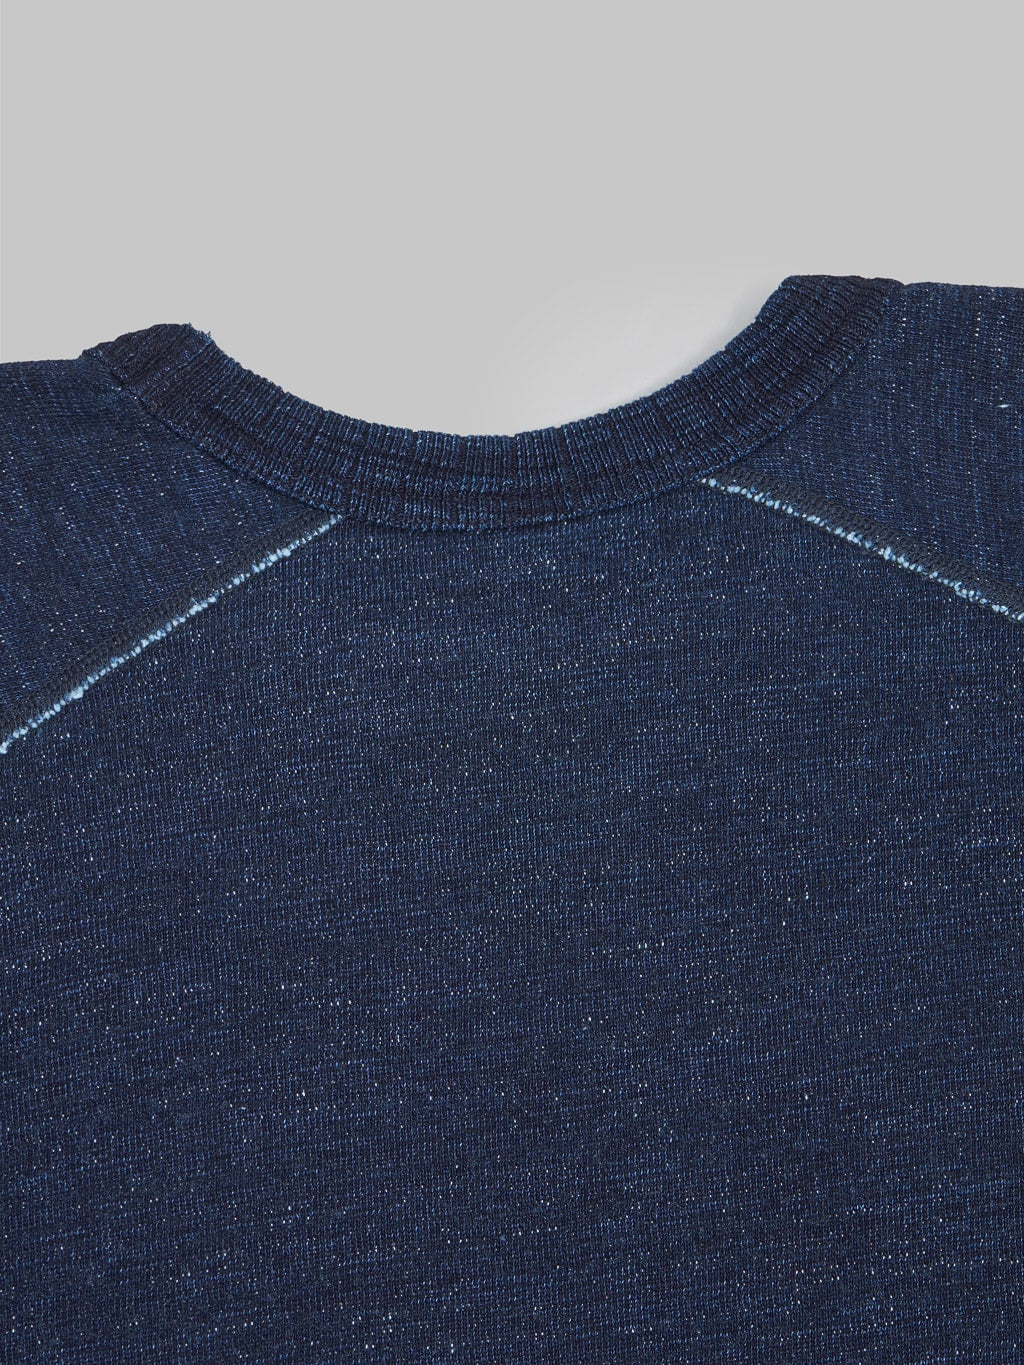  Pure Blue Japan Slub Yarn Sweatshirt Indigo seams